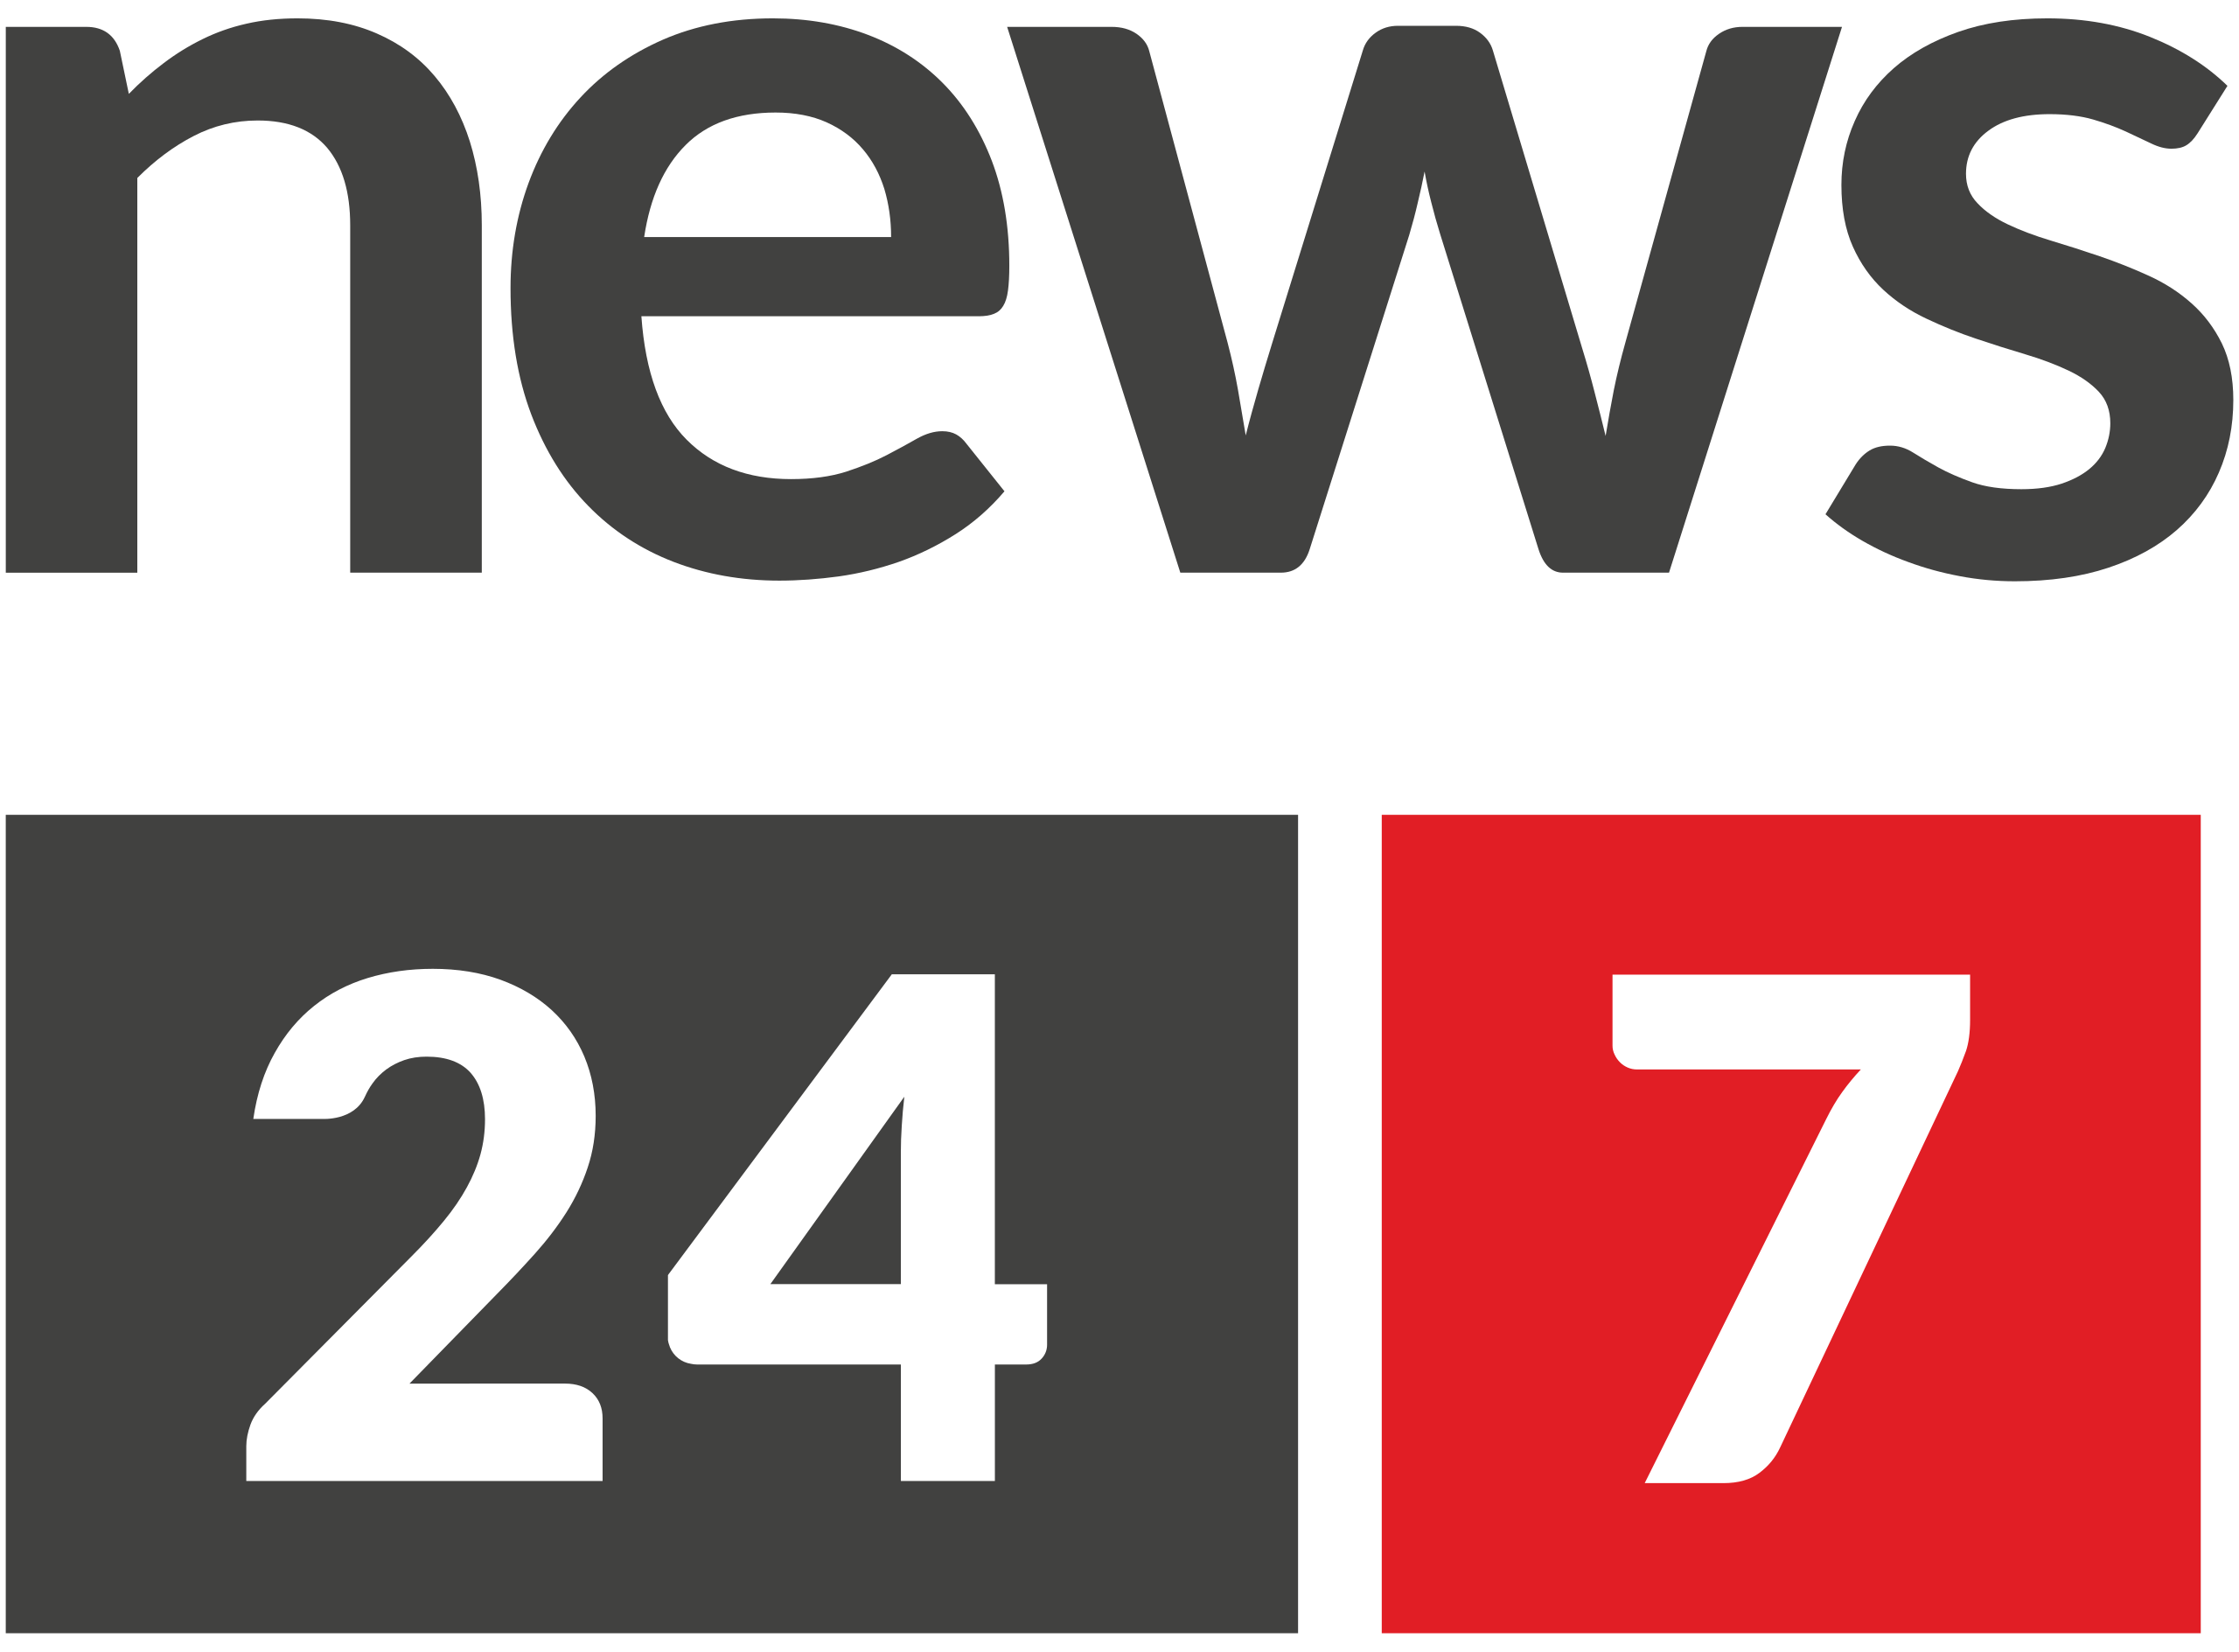 7 ньюс. News 24. News 24 logo. 7 News. Bbc News 24 logo.